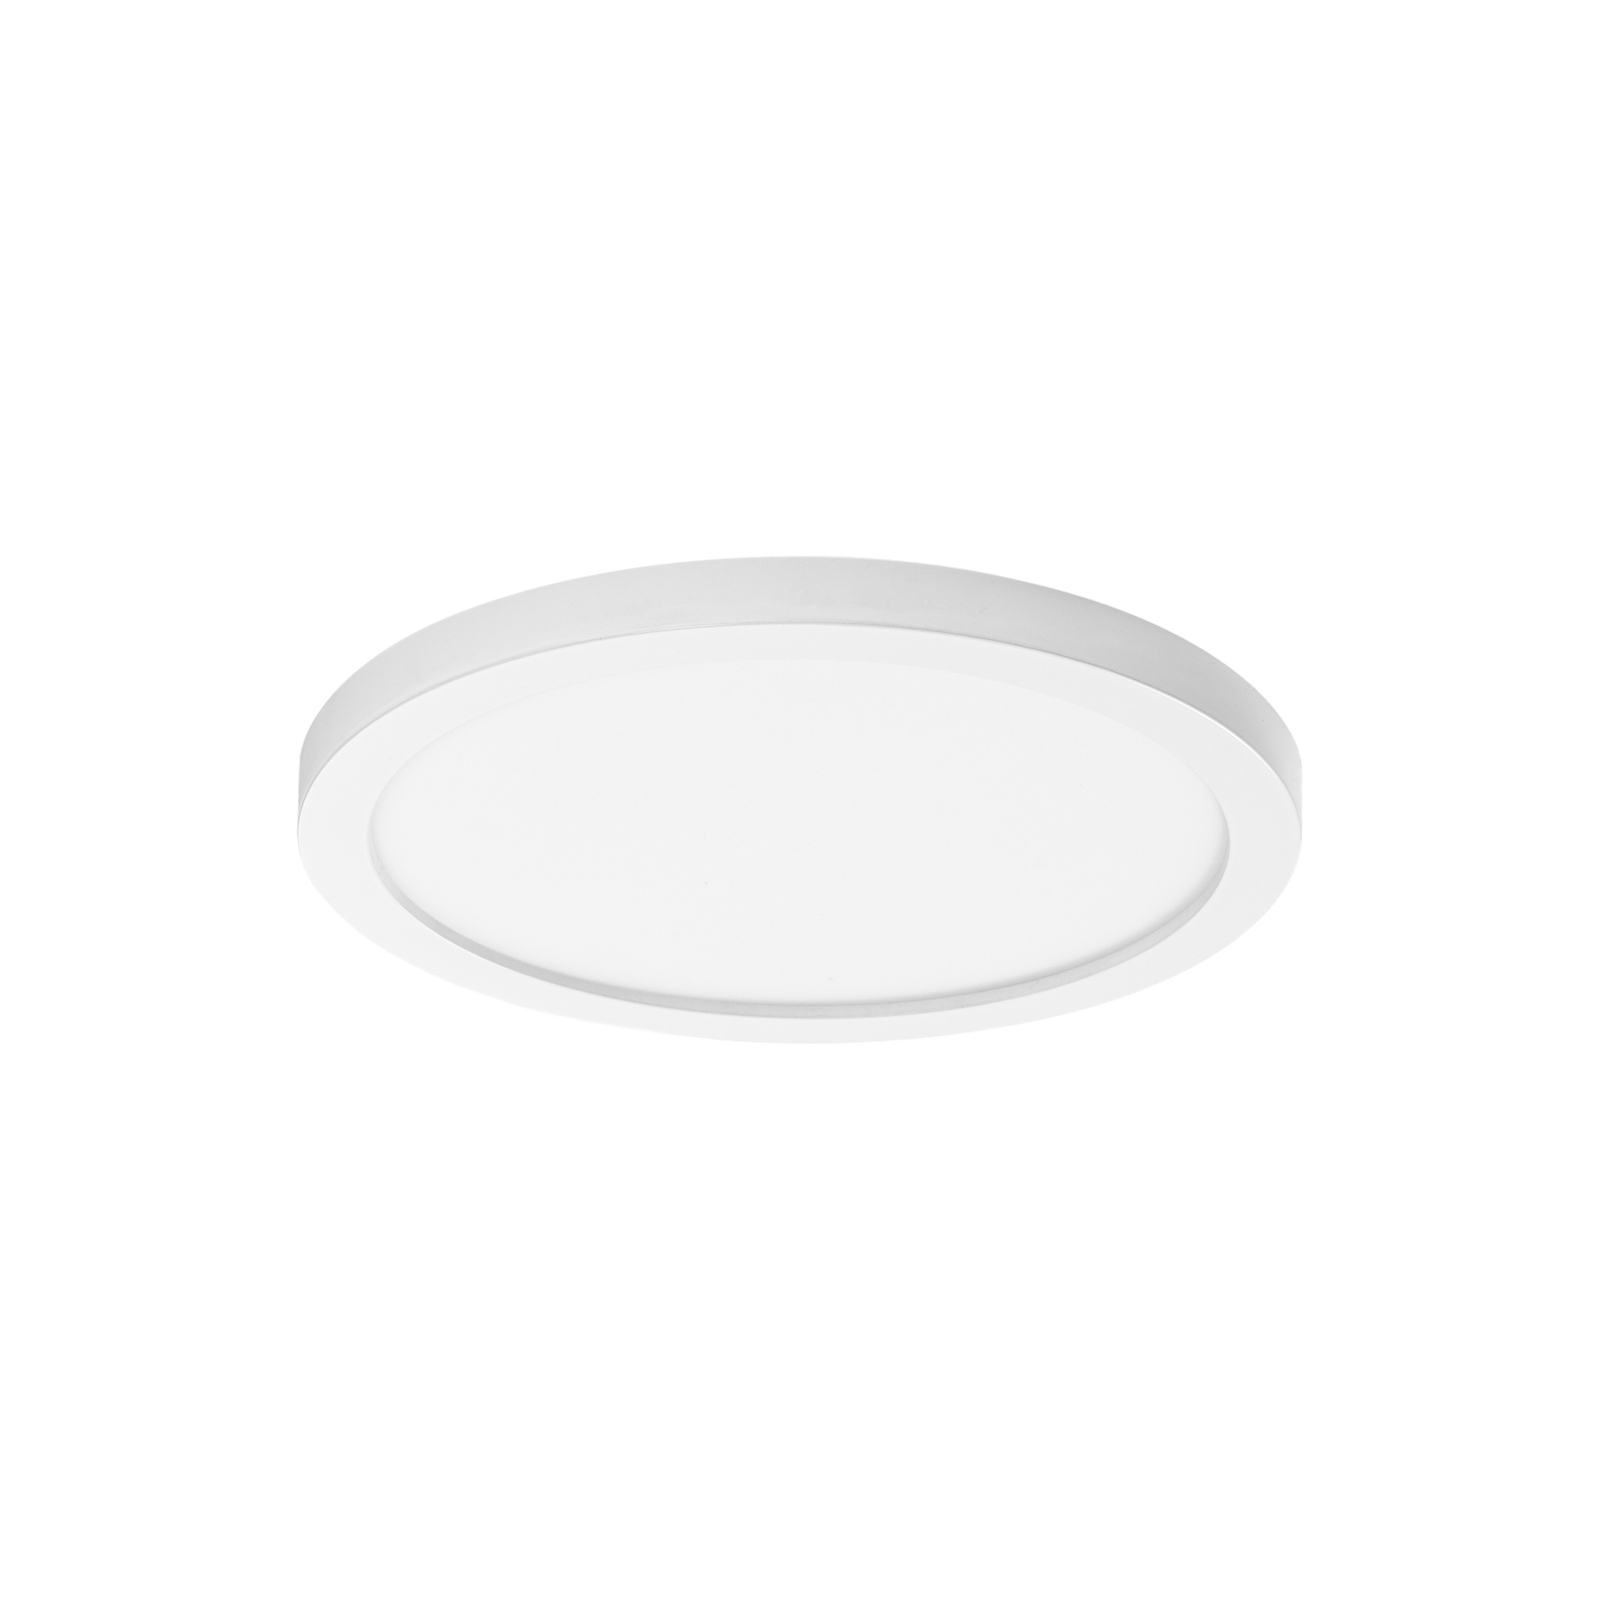 Plafonnier LED Solvie, blanc, rond, Ø 30 cm